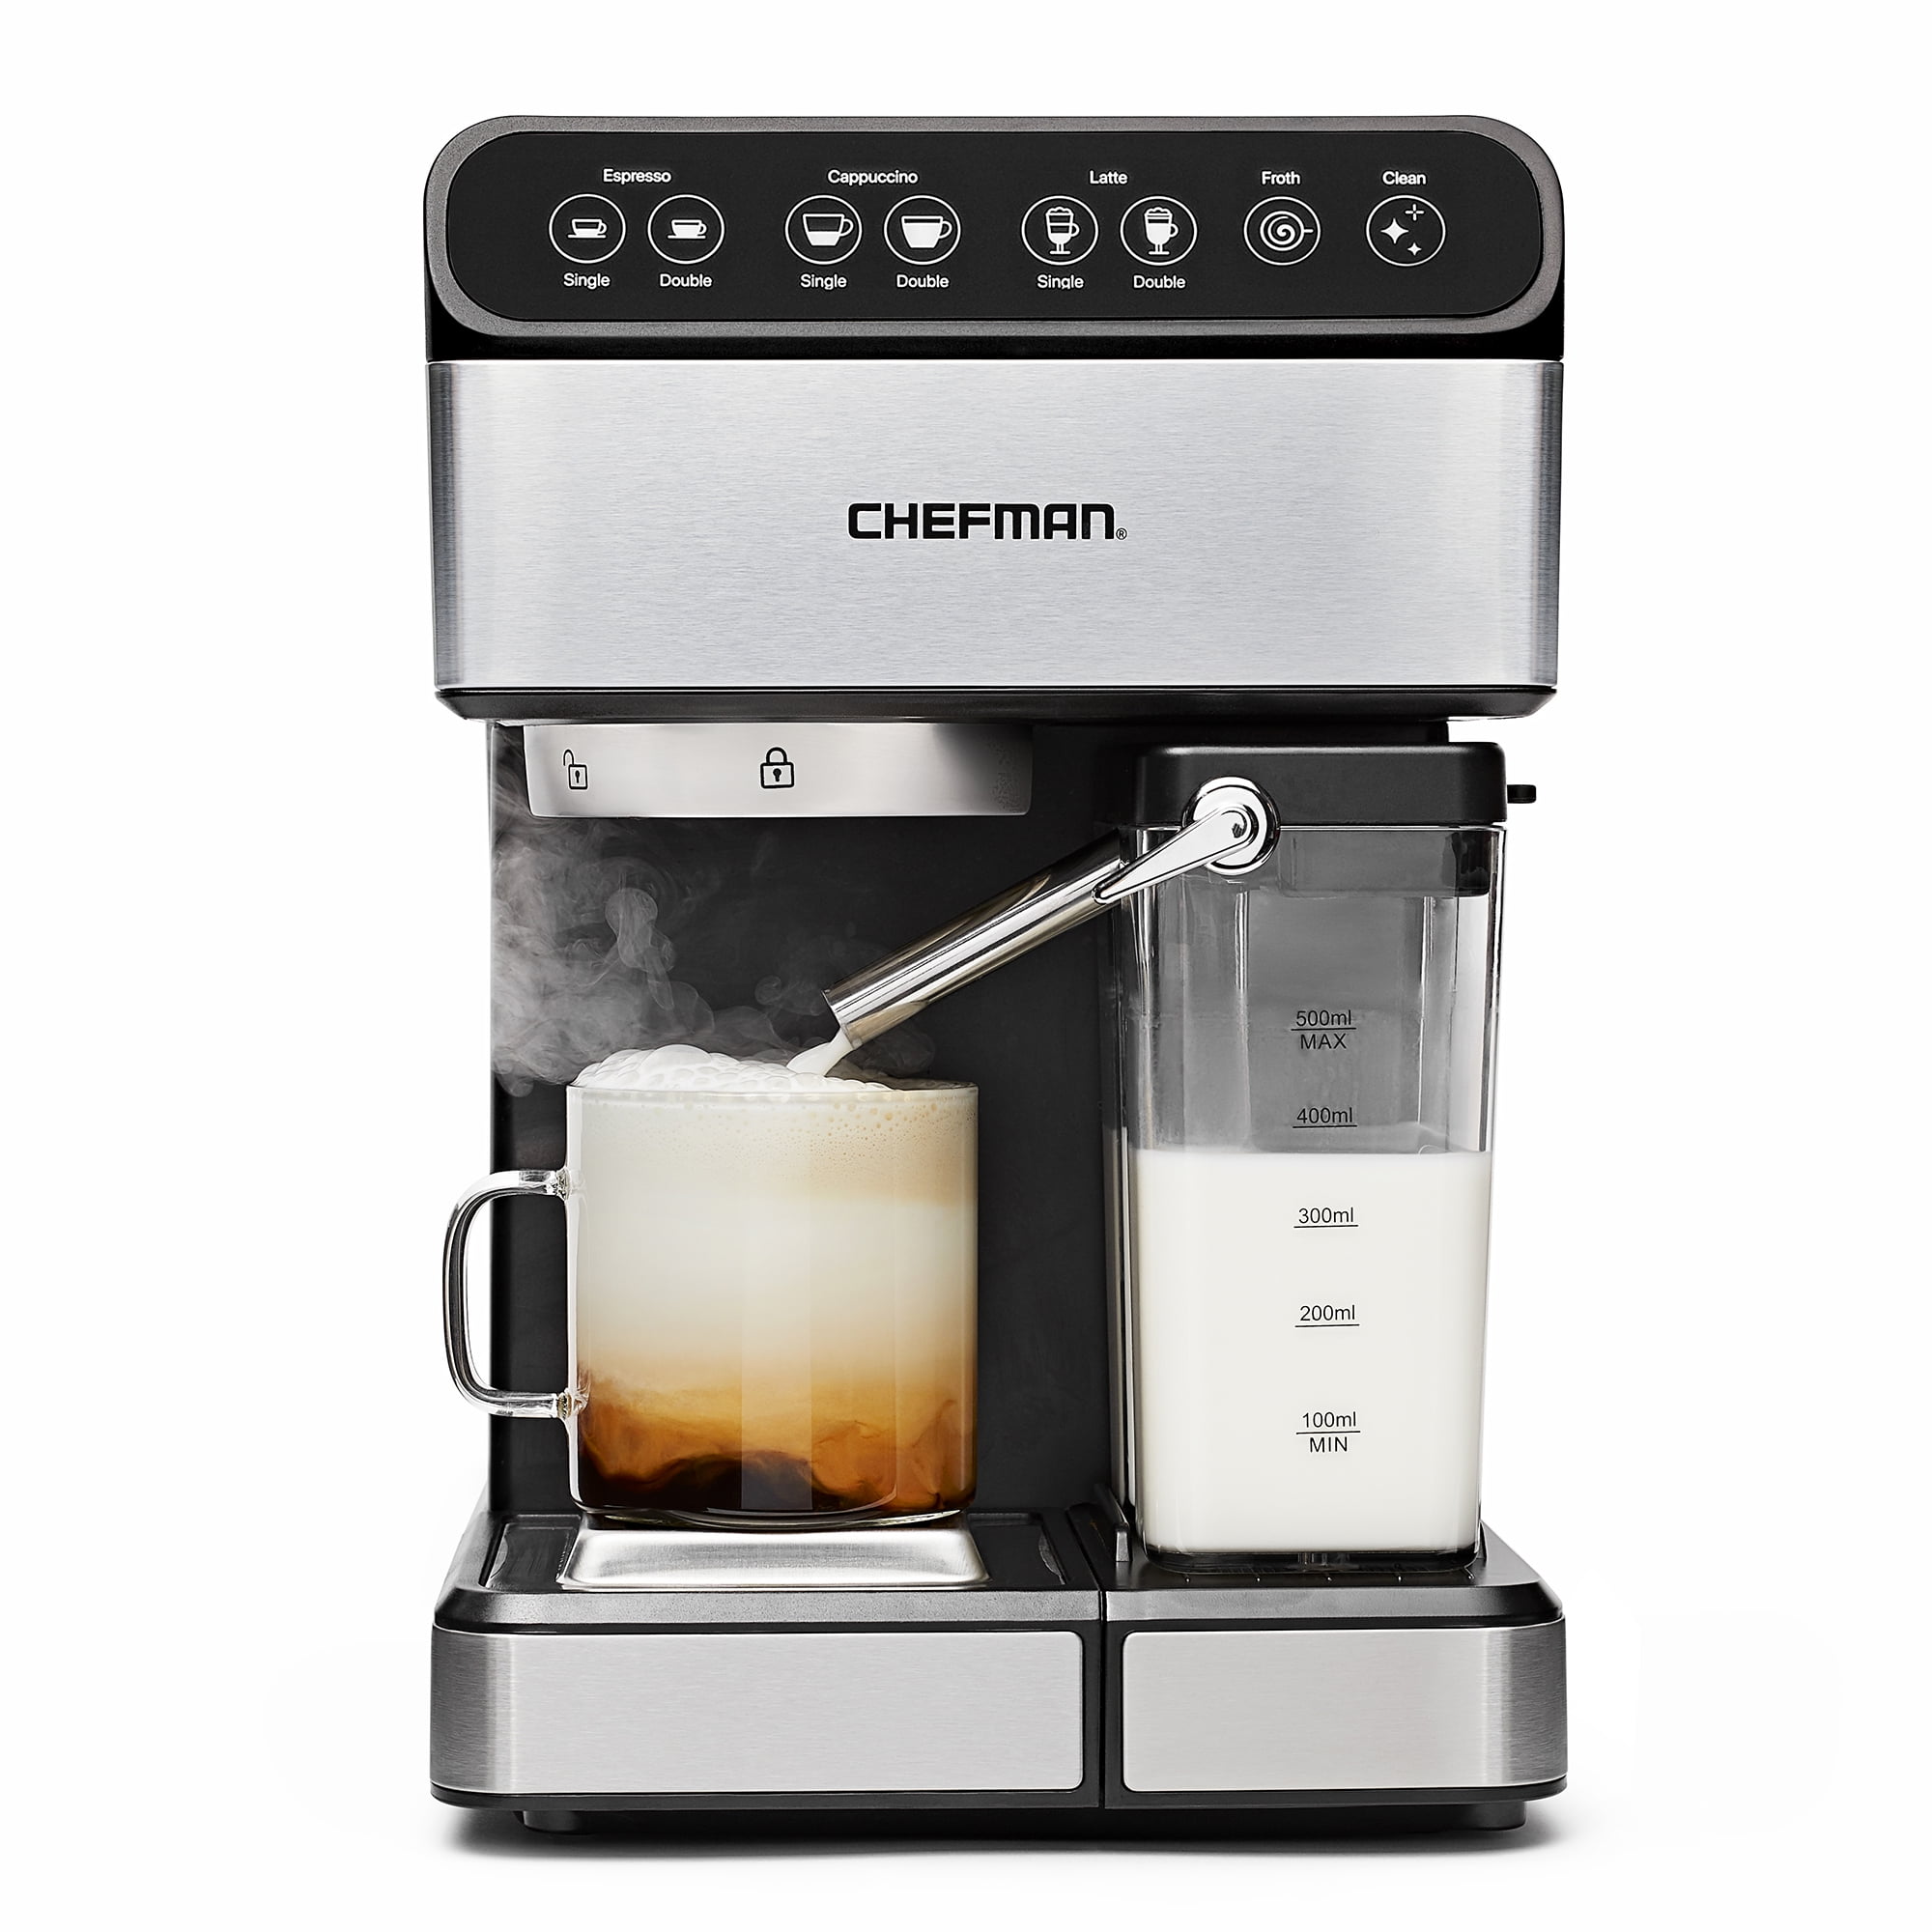 Chefman Digital Espresso Machine with Milk Frother, 15 Bar, Silver Stainless Steel, New